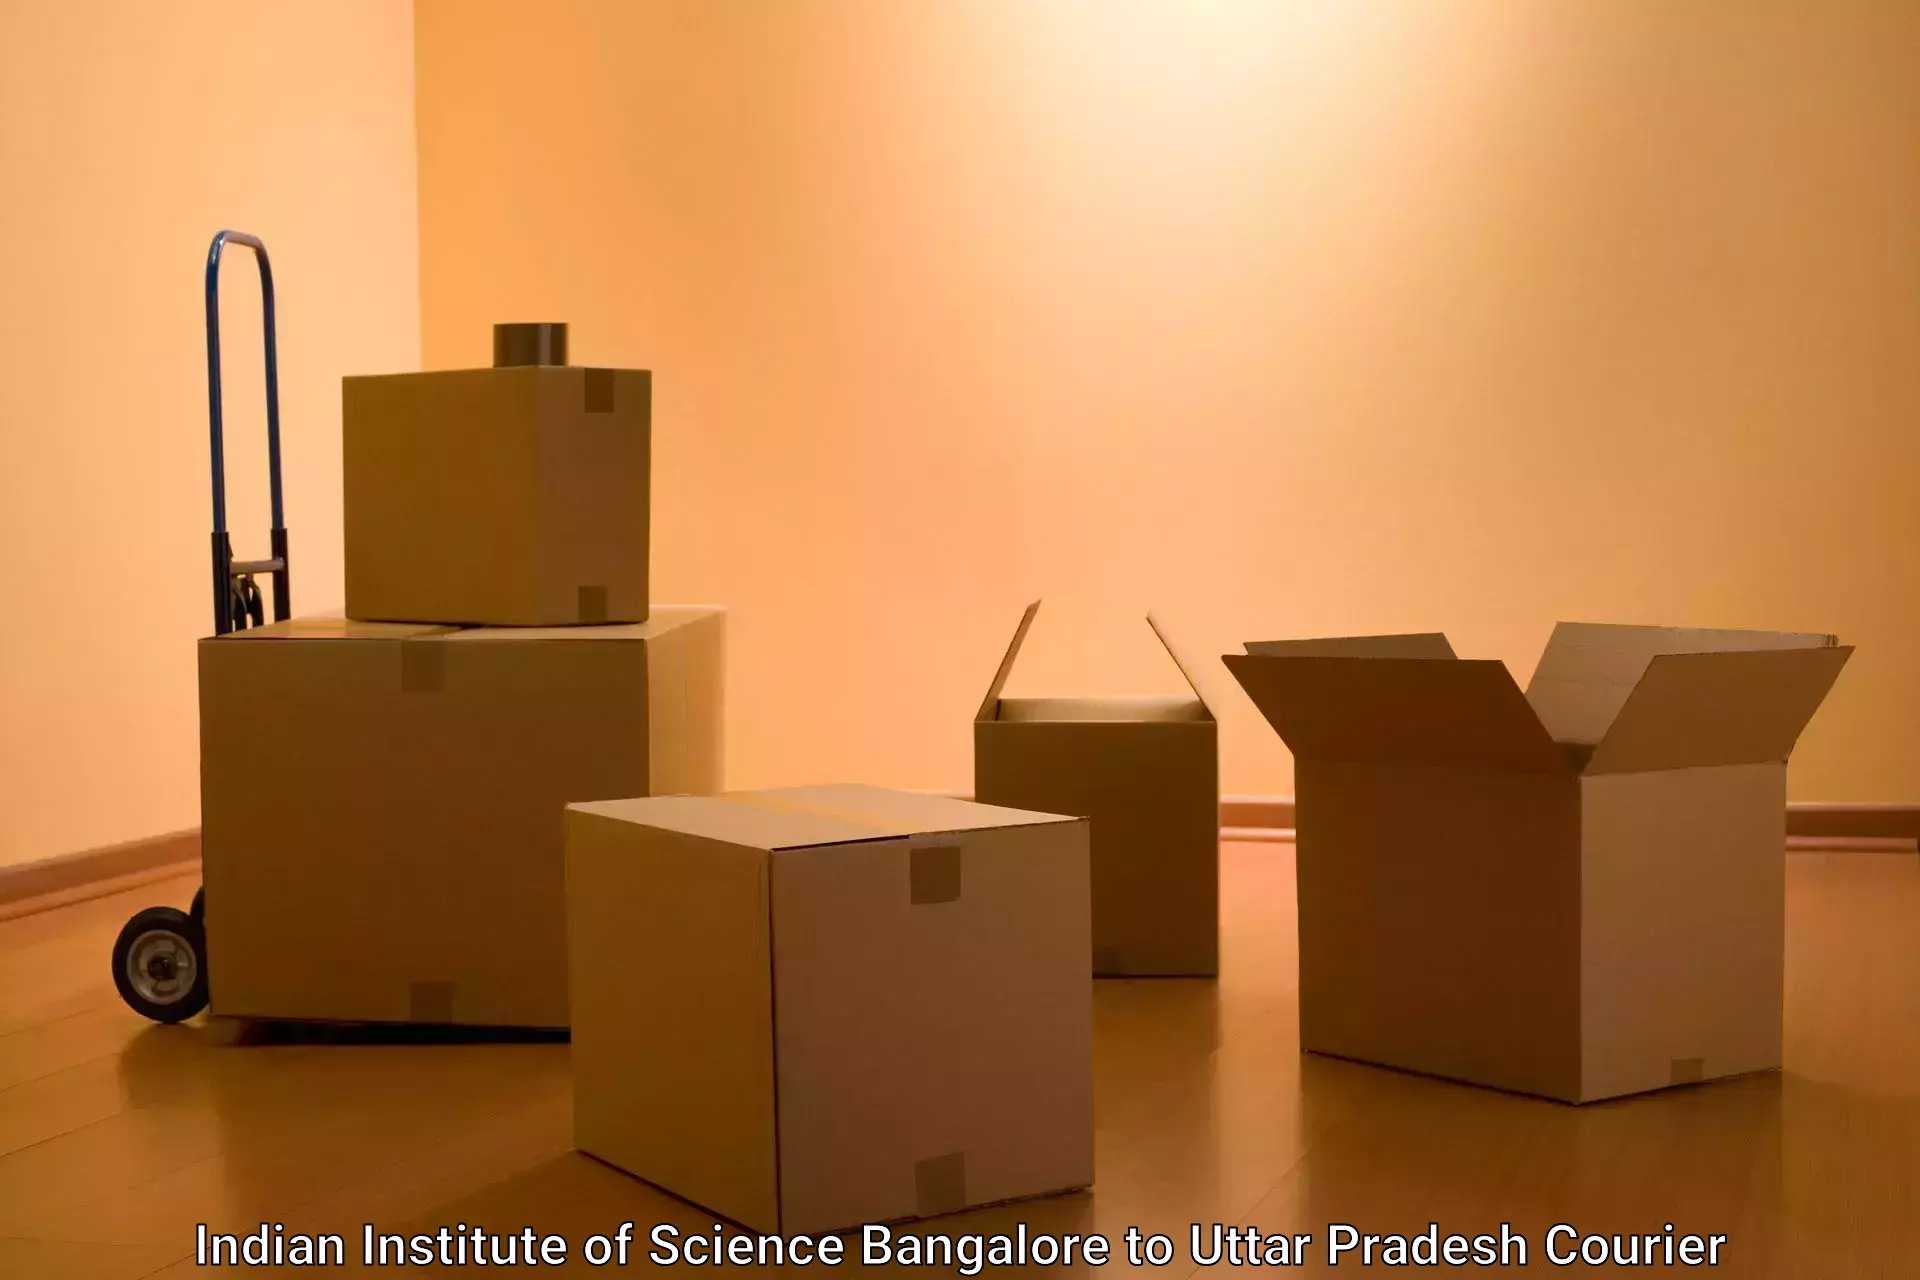 Global logistics network Indian Institute of Science Bangalore to Aligarh Muslim University